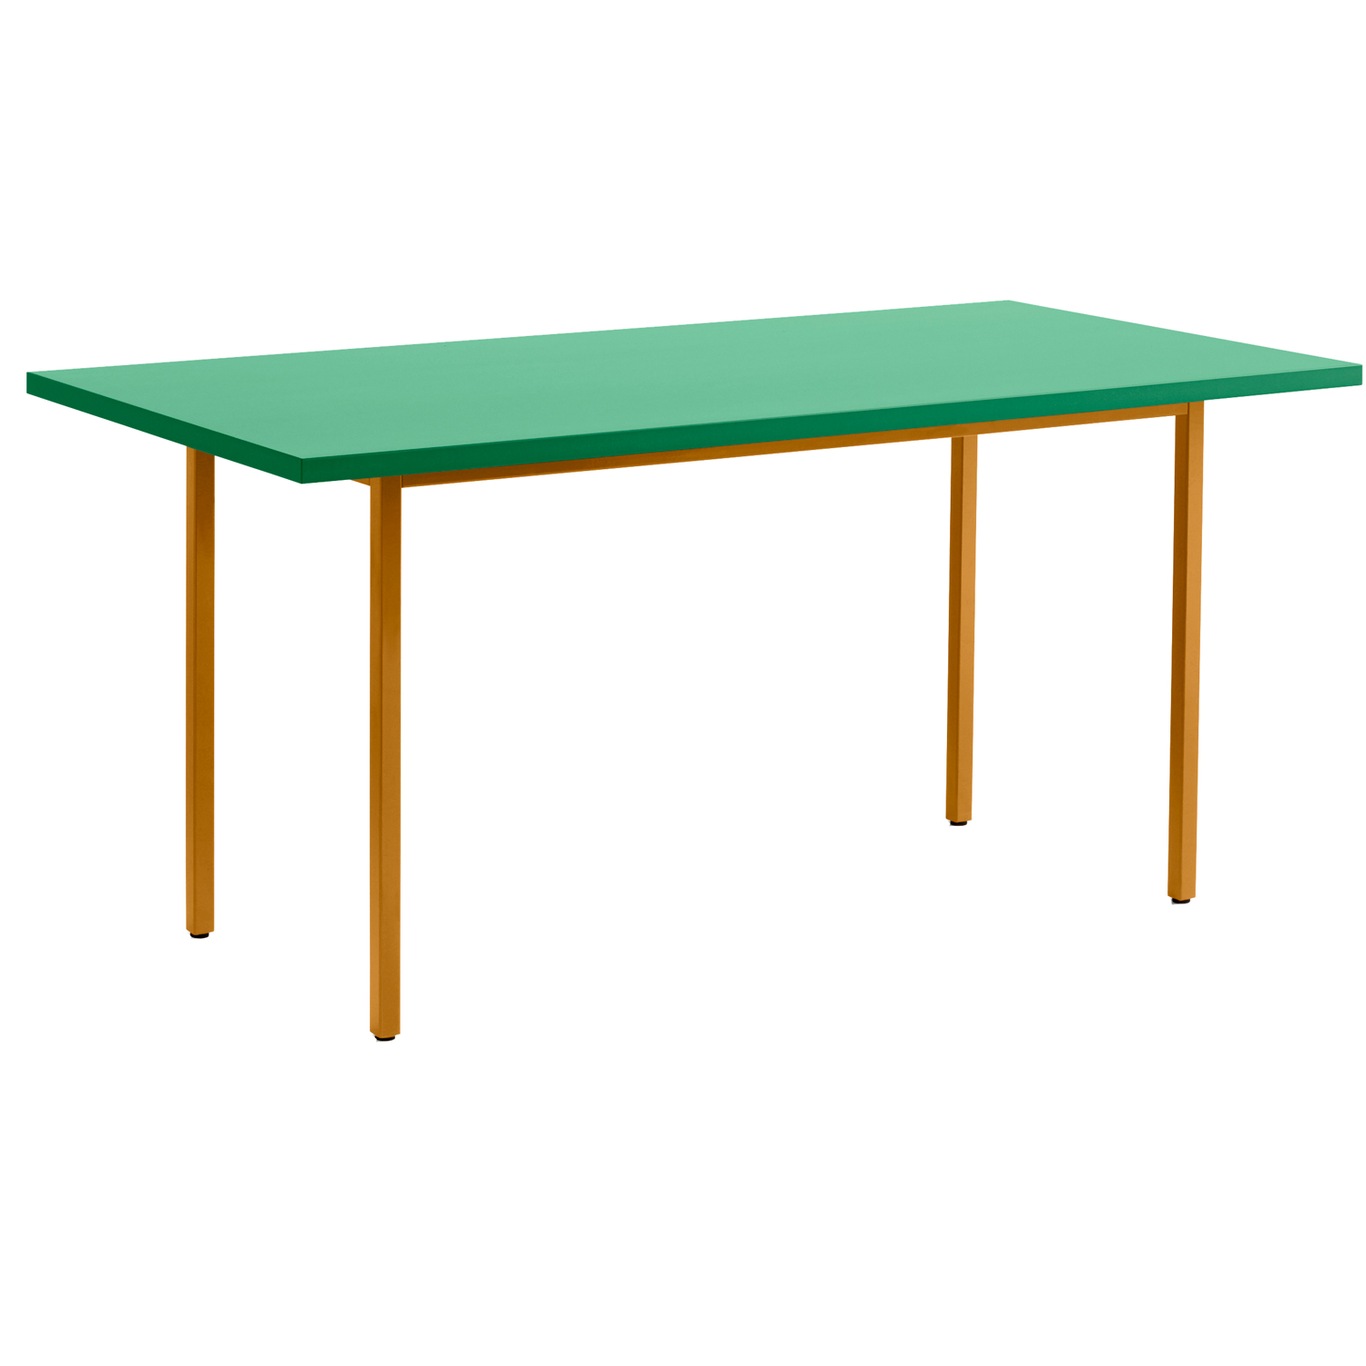 Two-Colour Bord 160x82 cm, Ochre / Green Mint